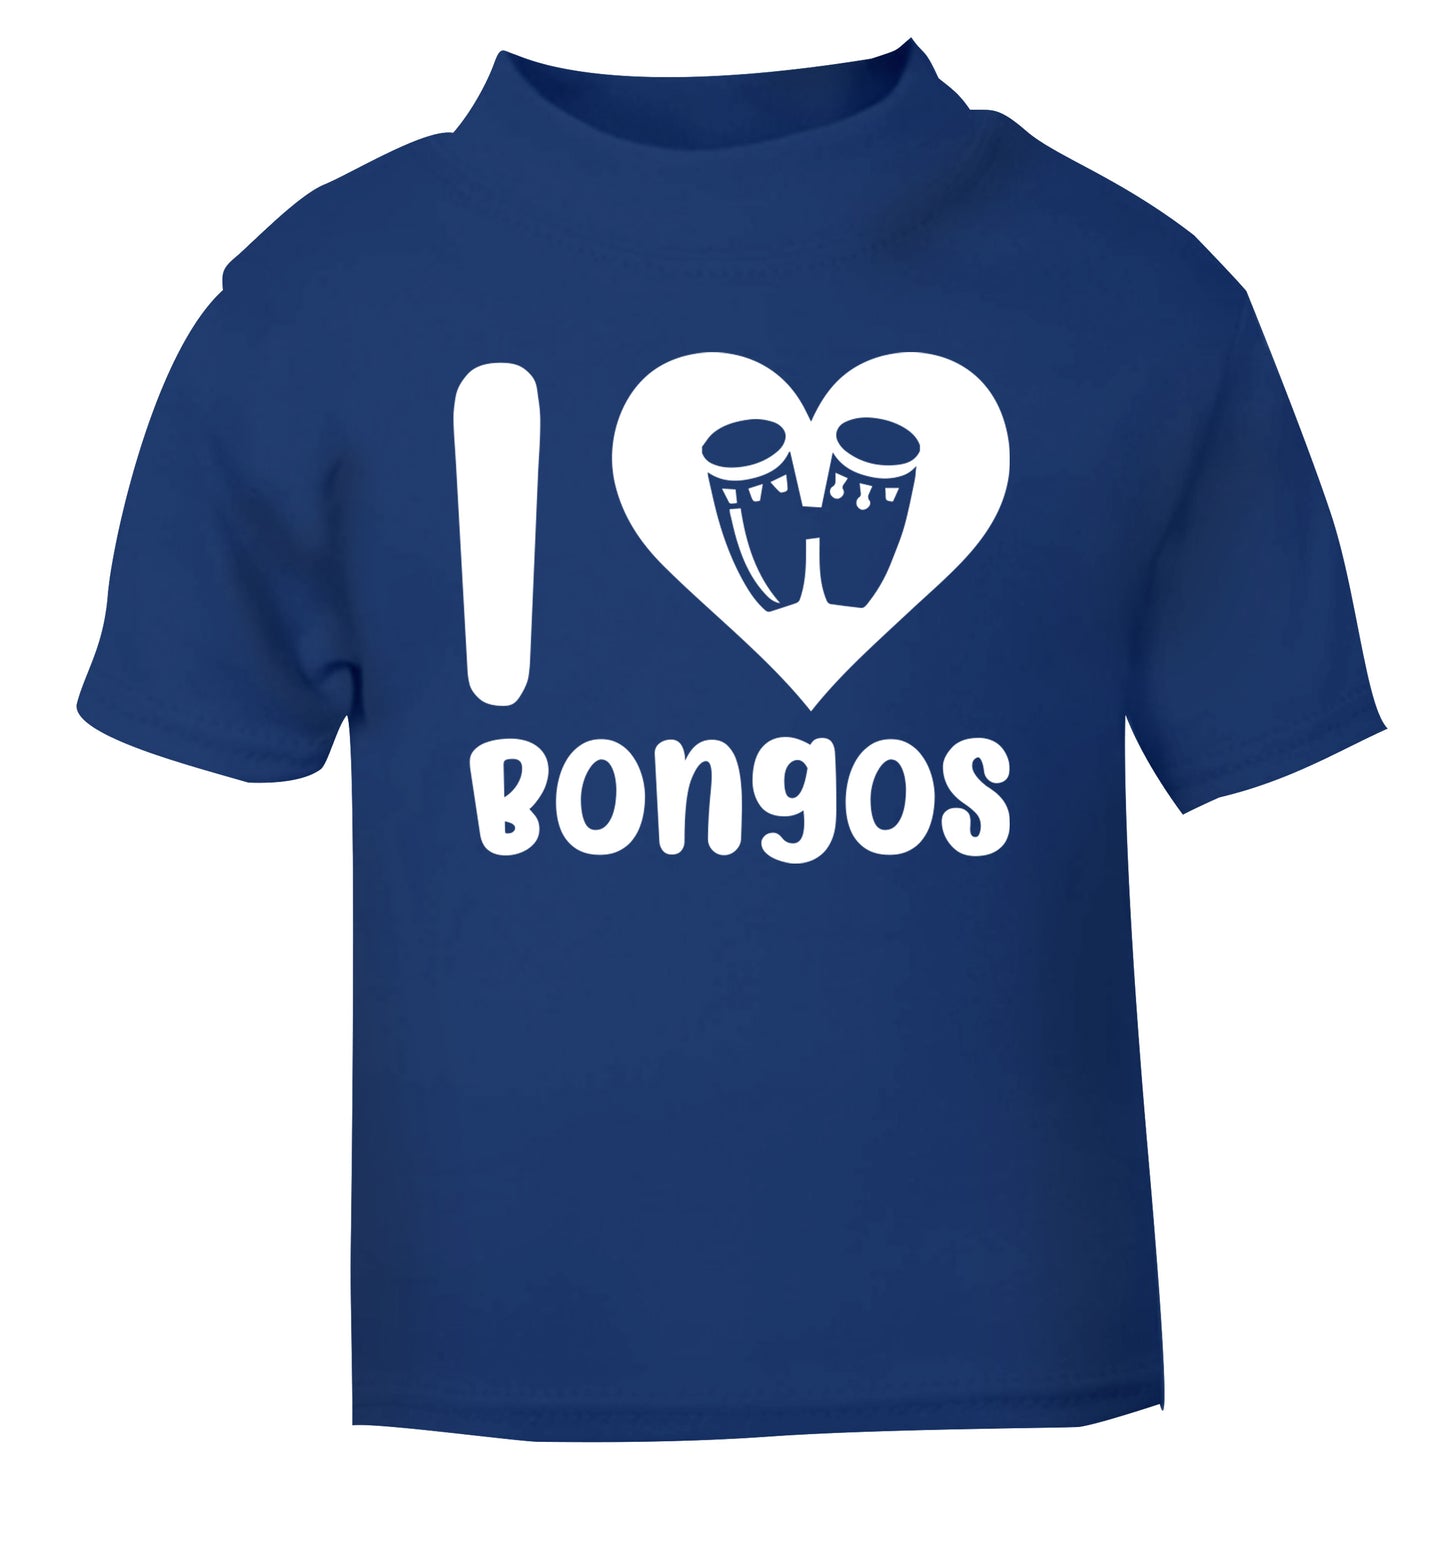 I love bongos blue Baby Toddler Tshirt 2 Years